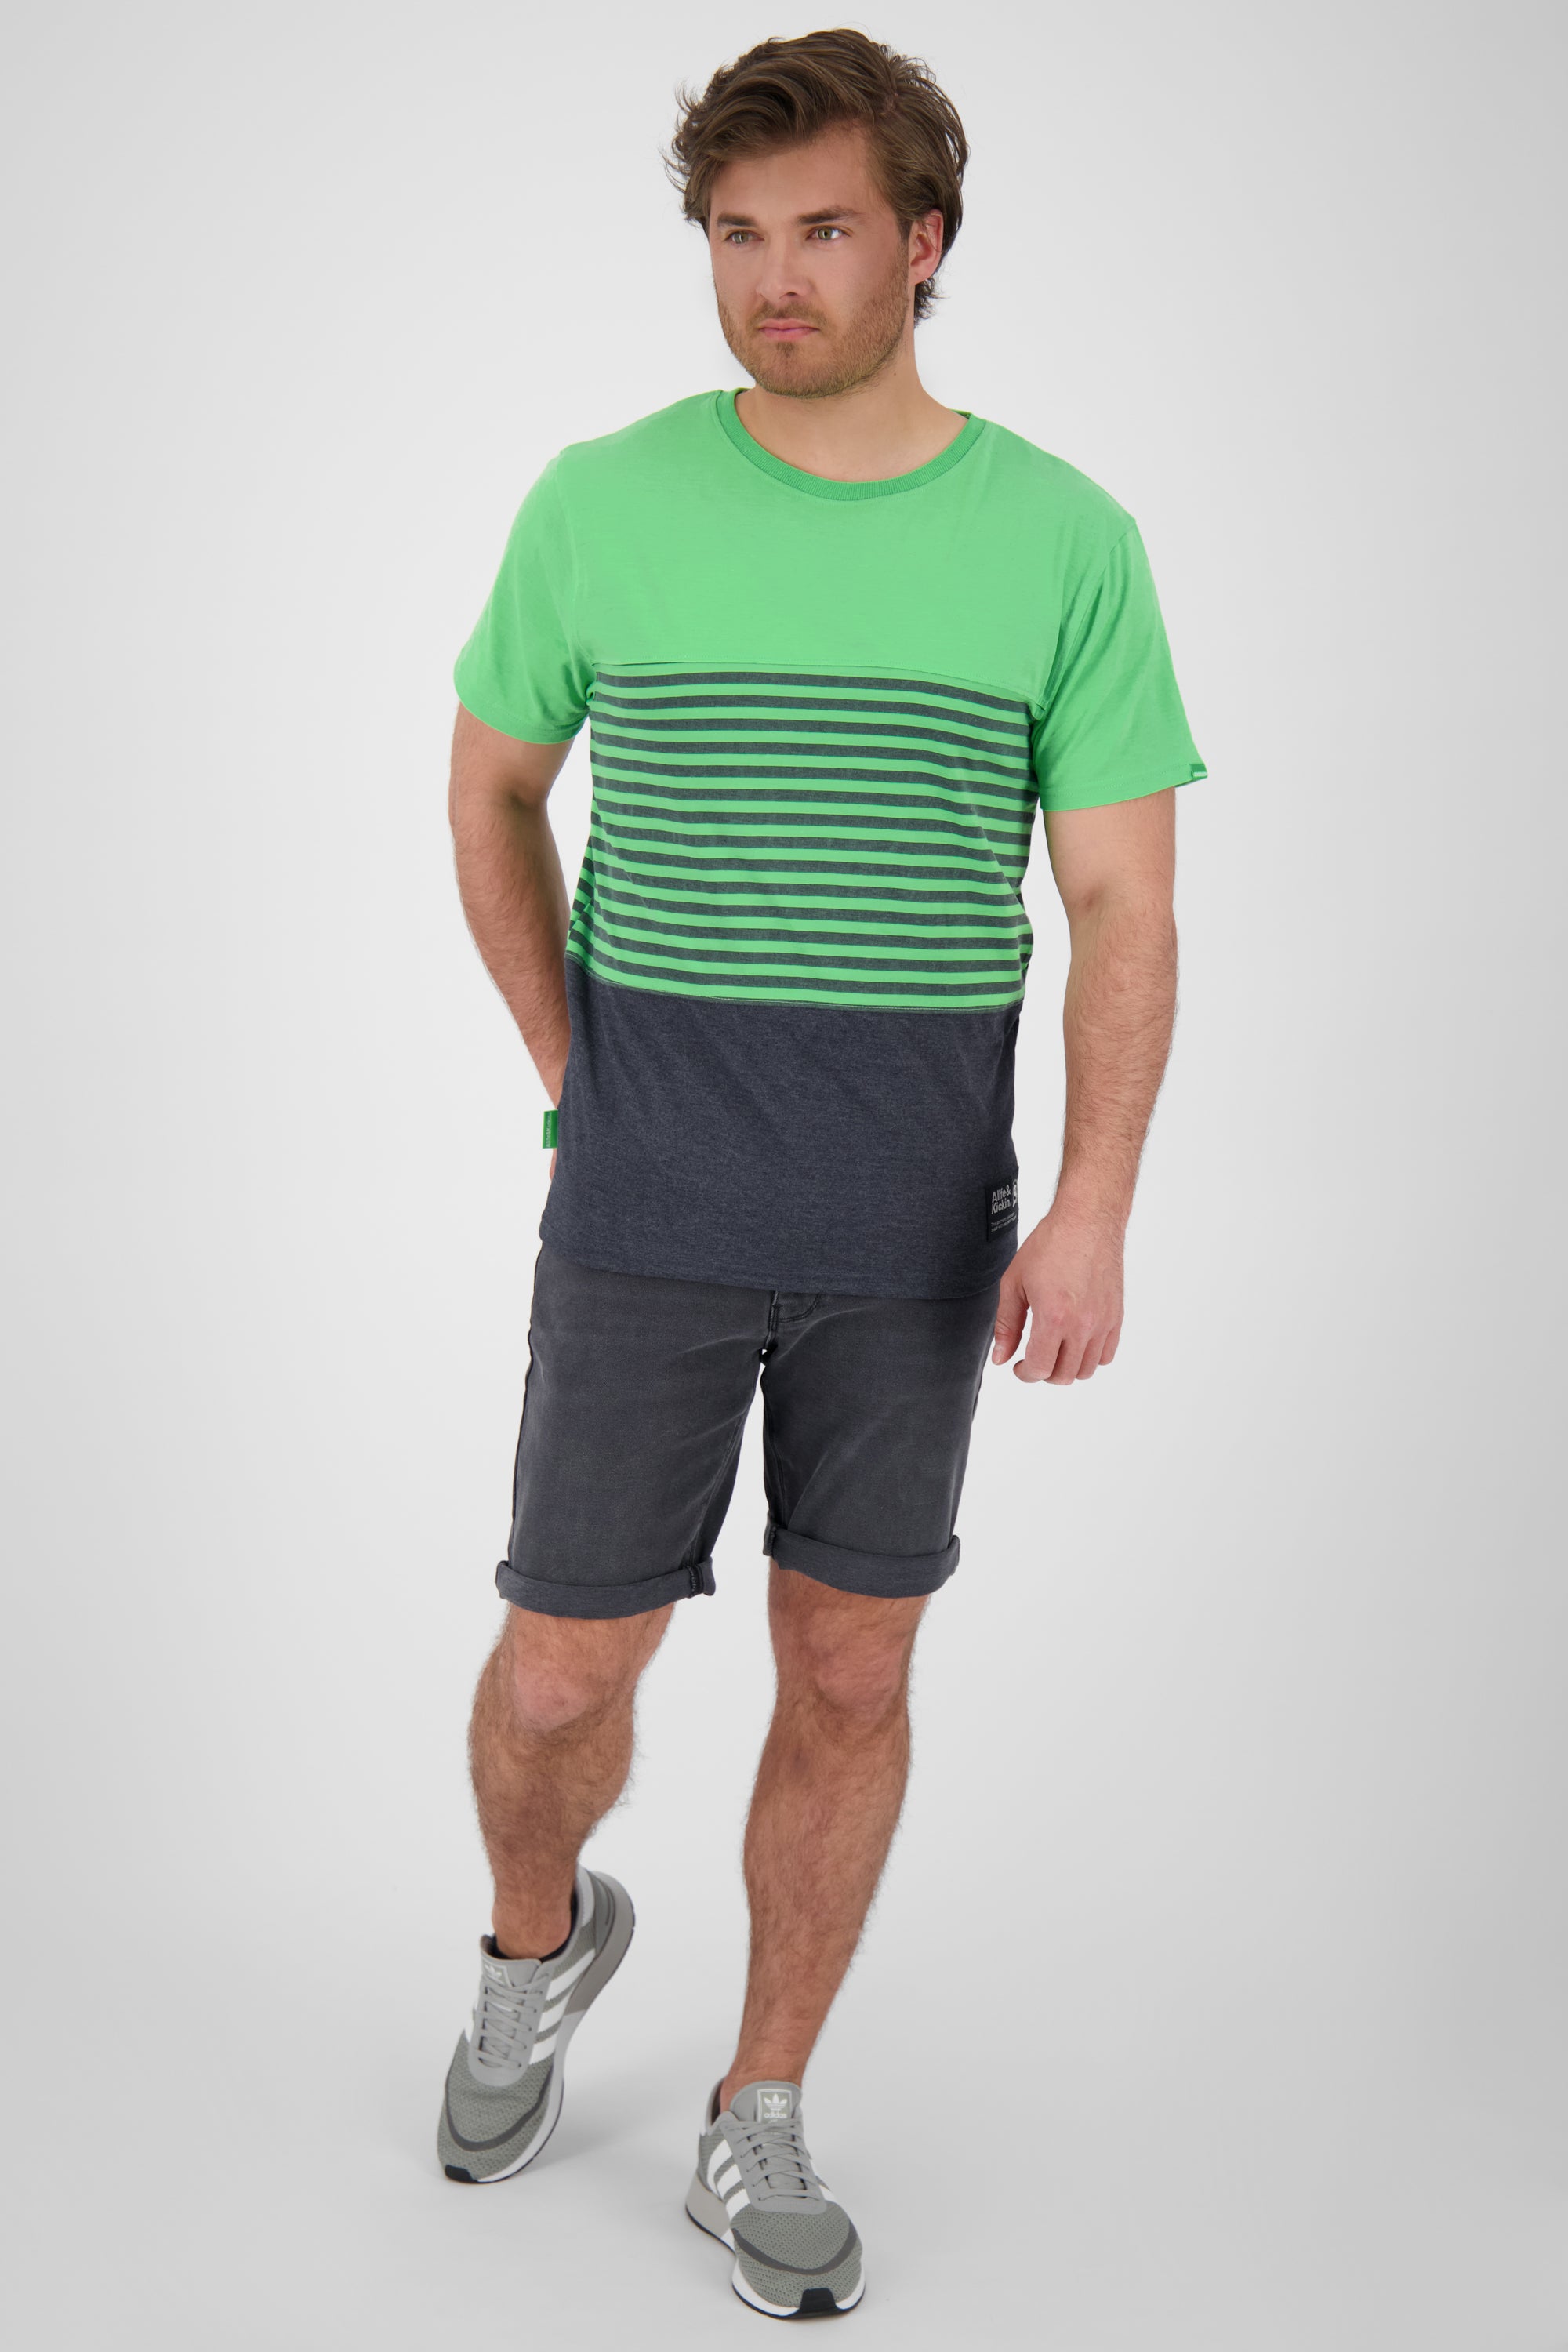 BenAK B - Farbenfrohes Herren T-Shirt für den Sommer Dunkelblau